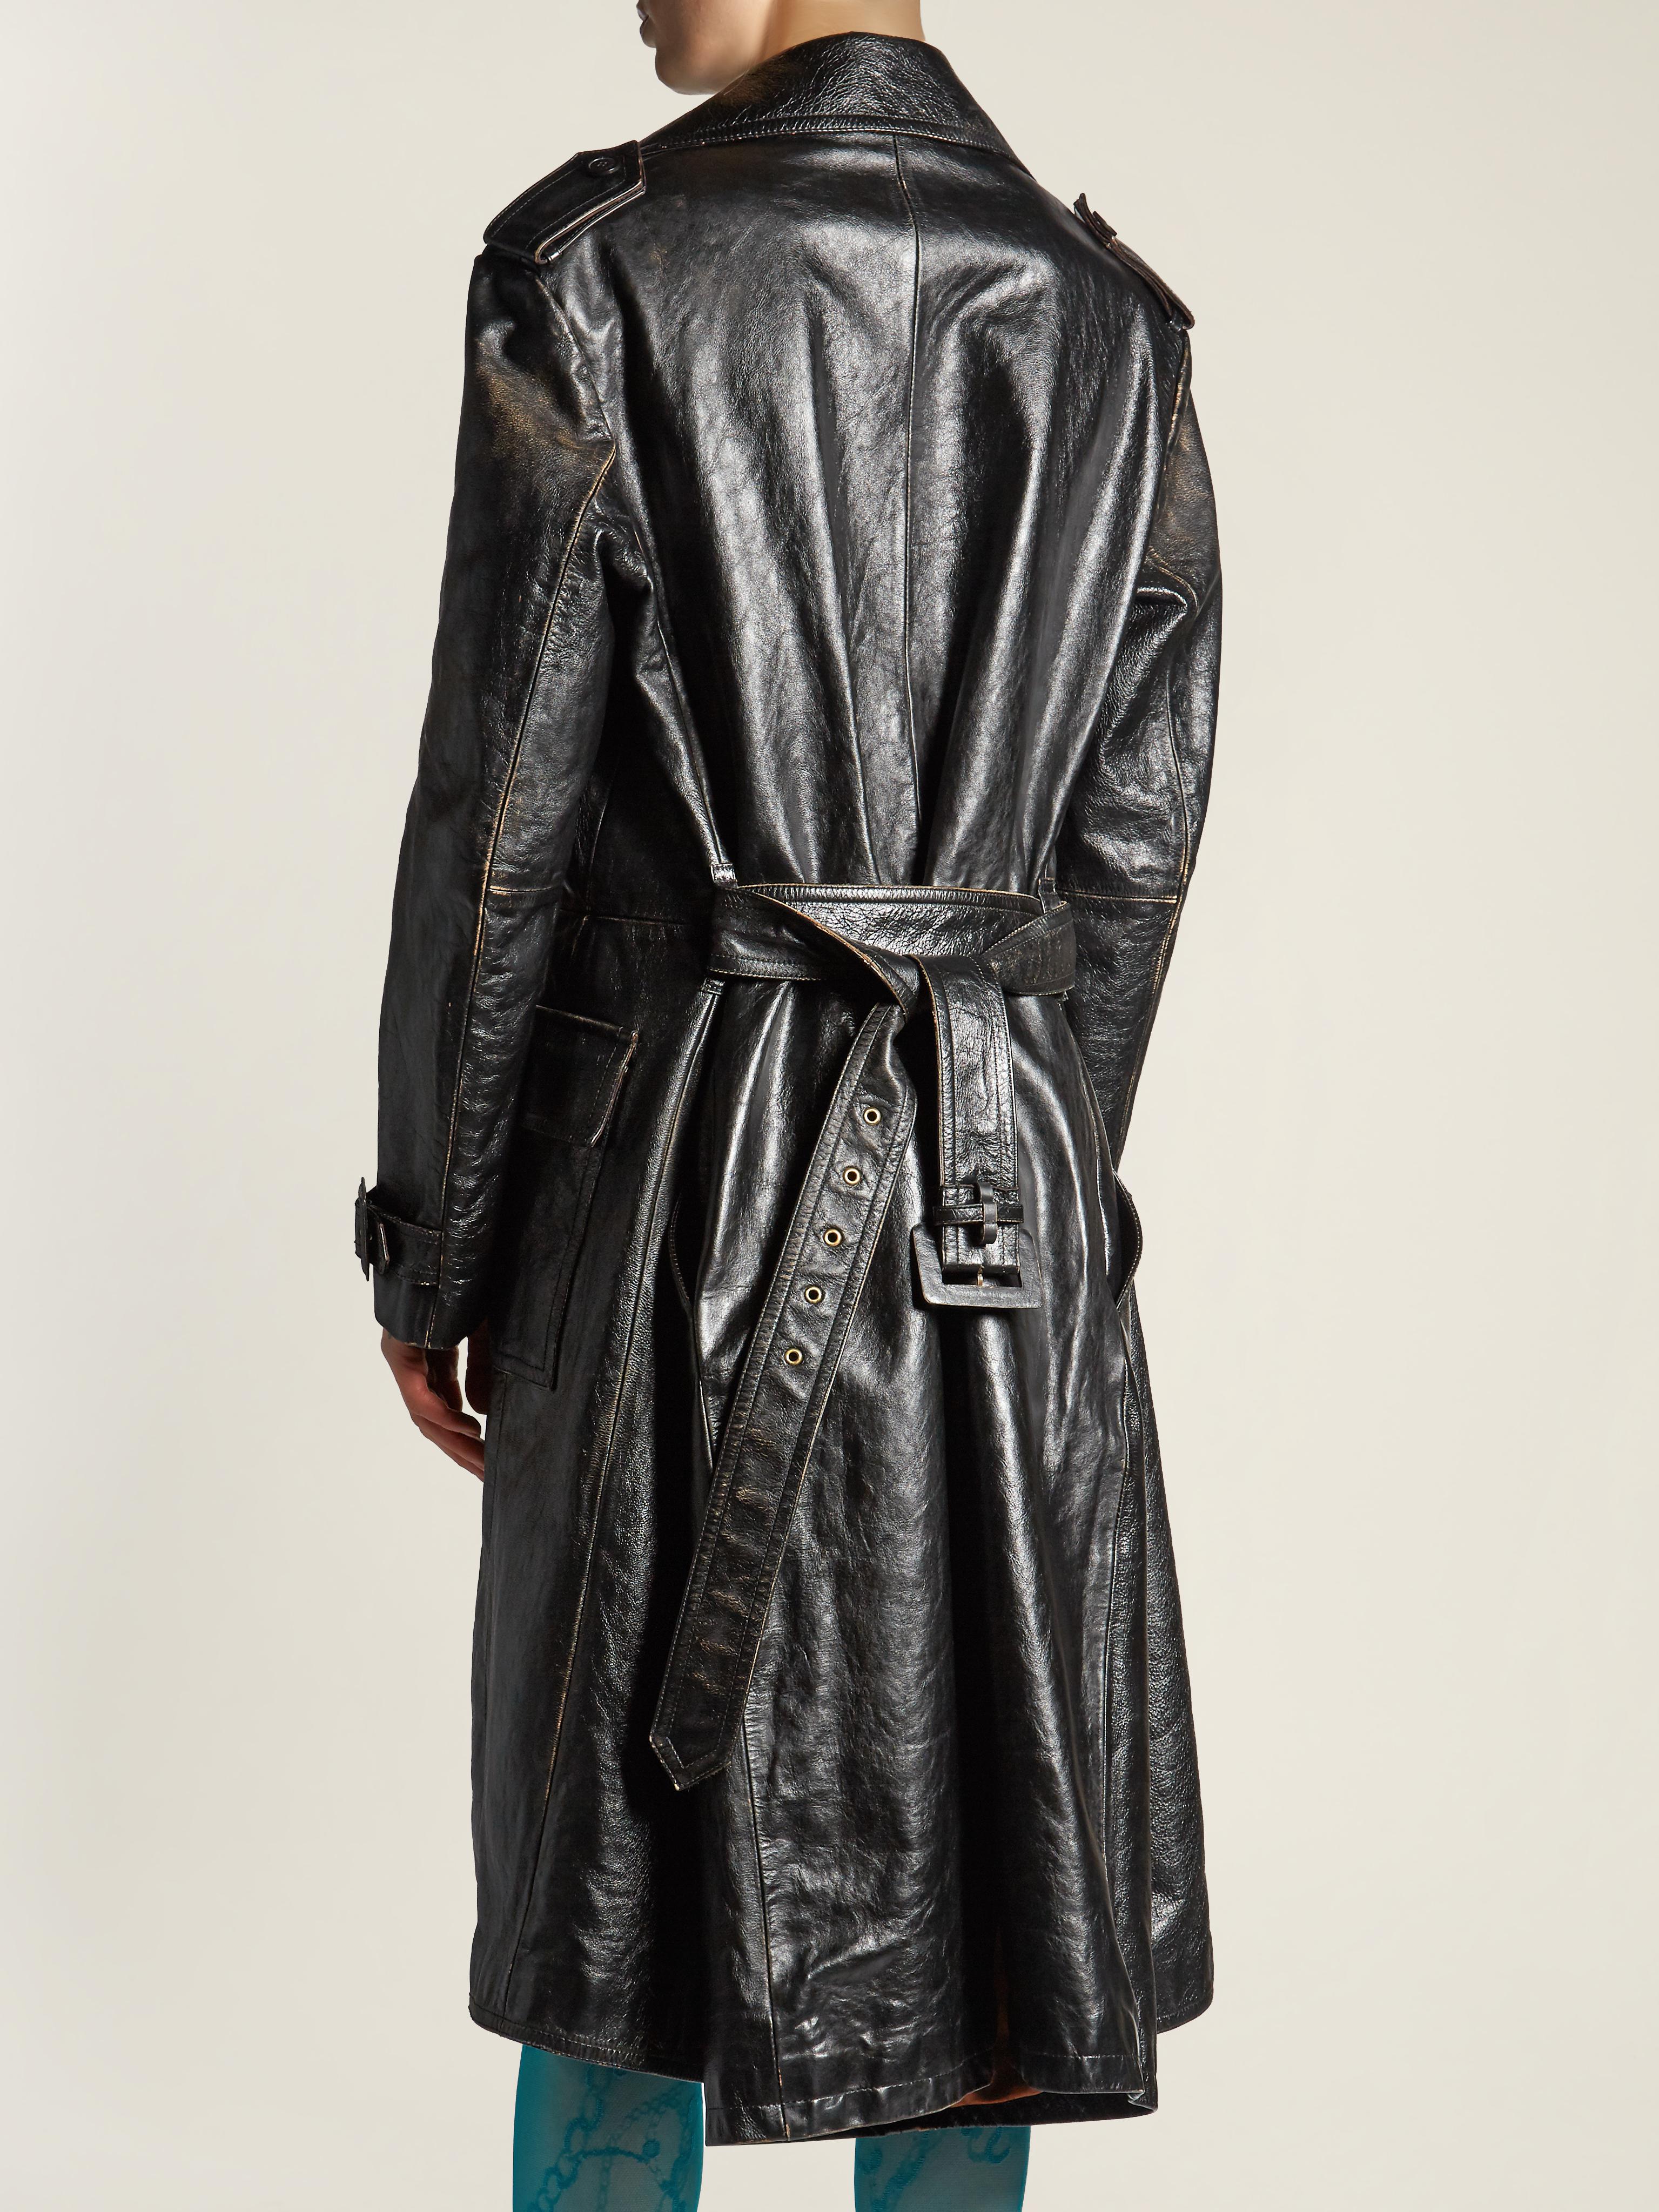 Balenciaga Hybrid Leather Trench Coat in Black | Lyst